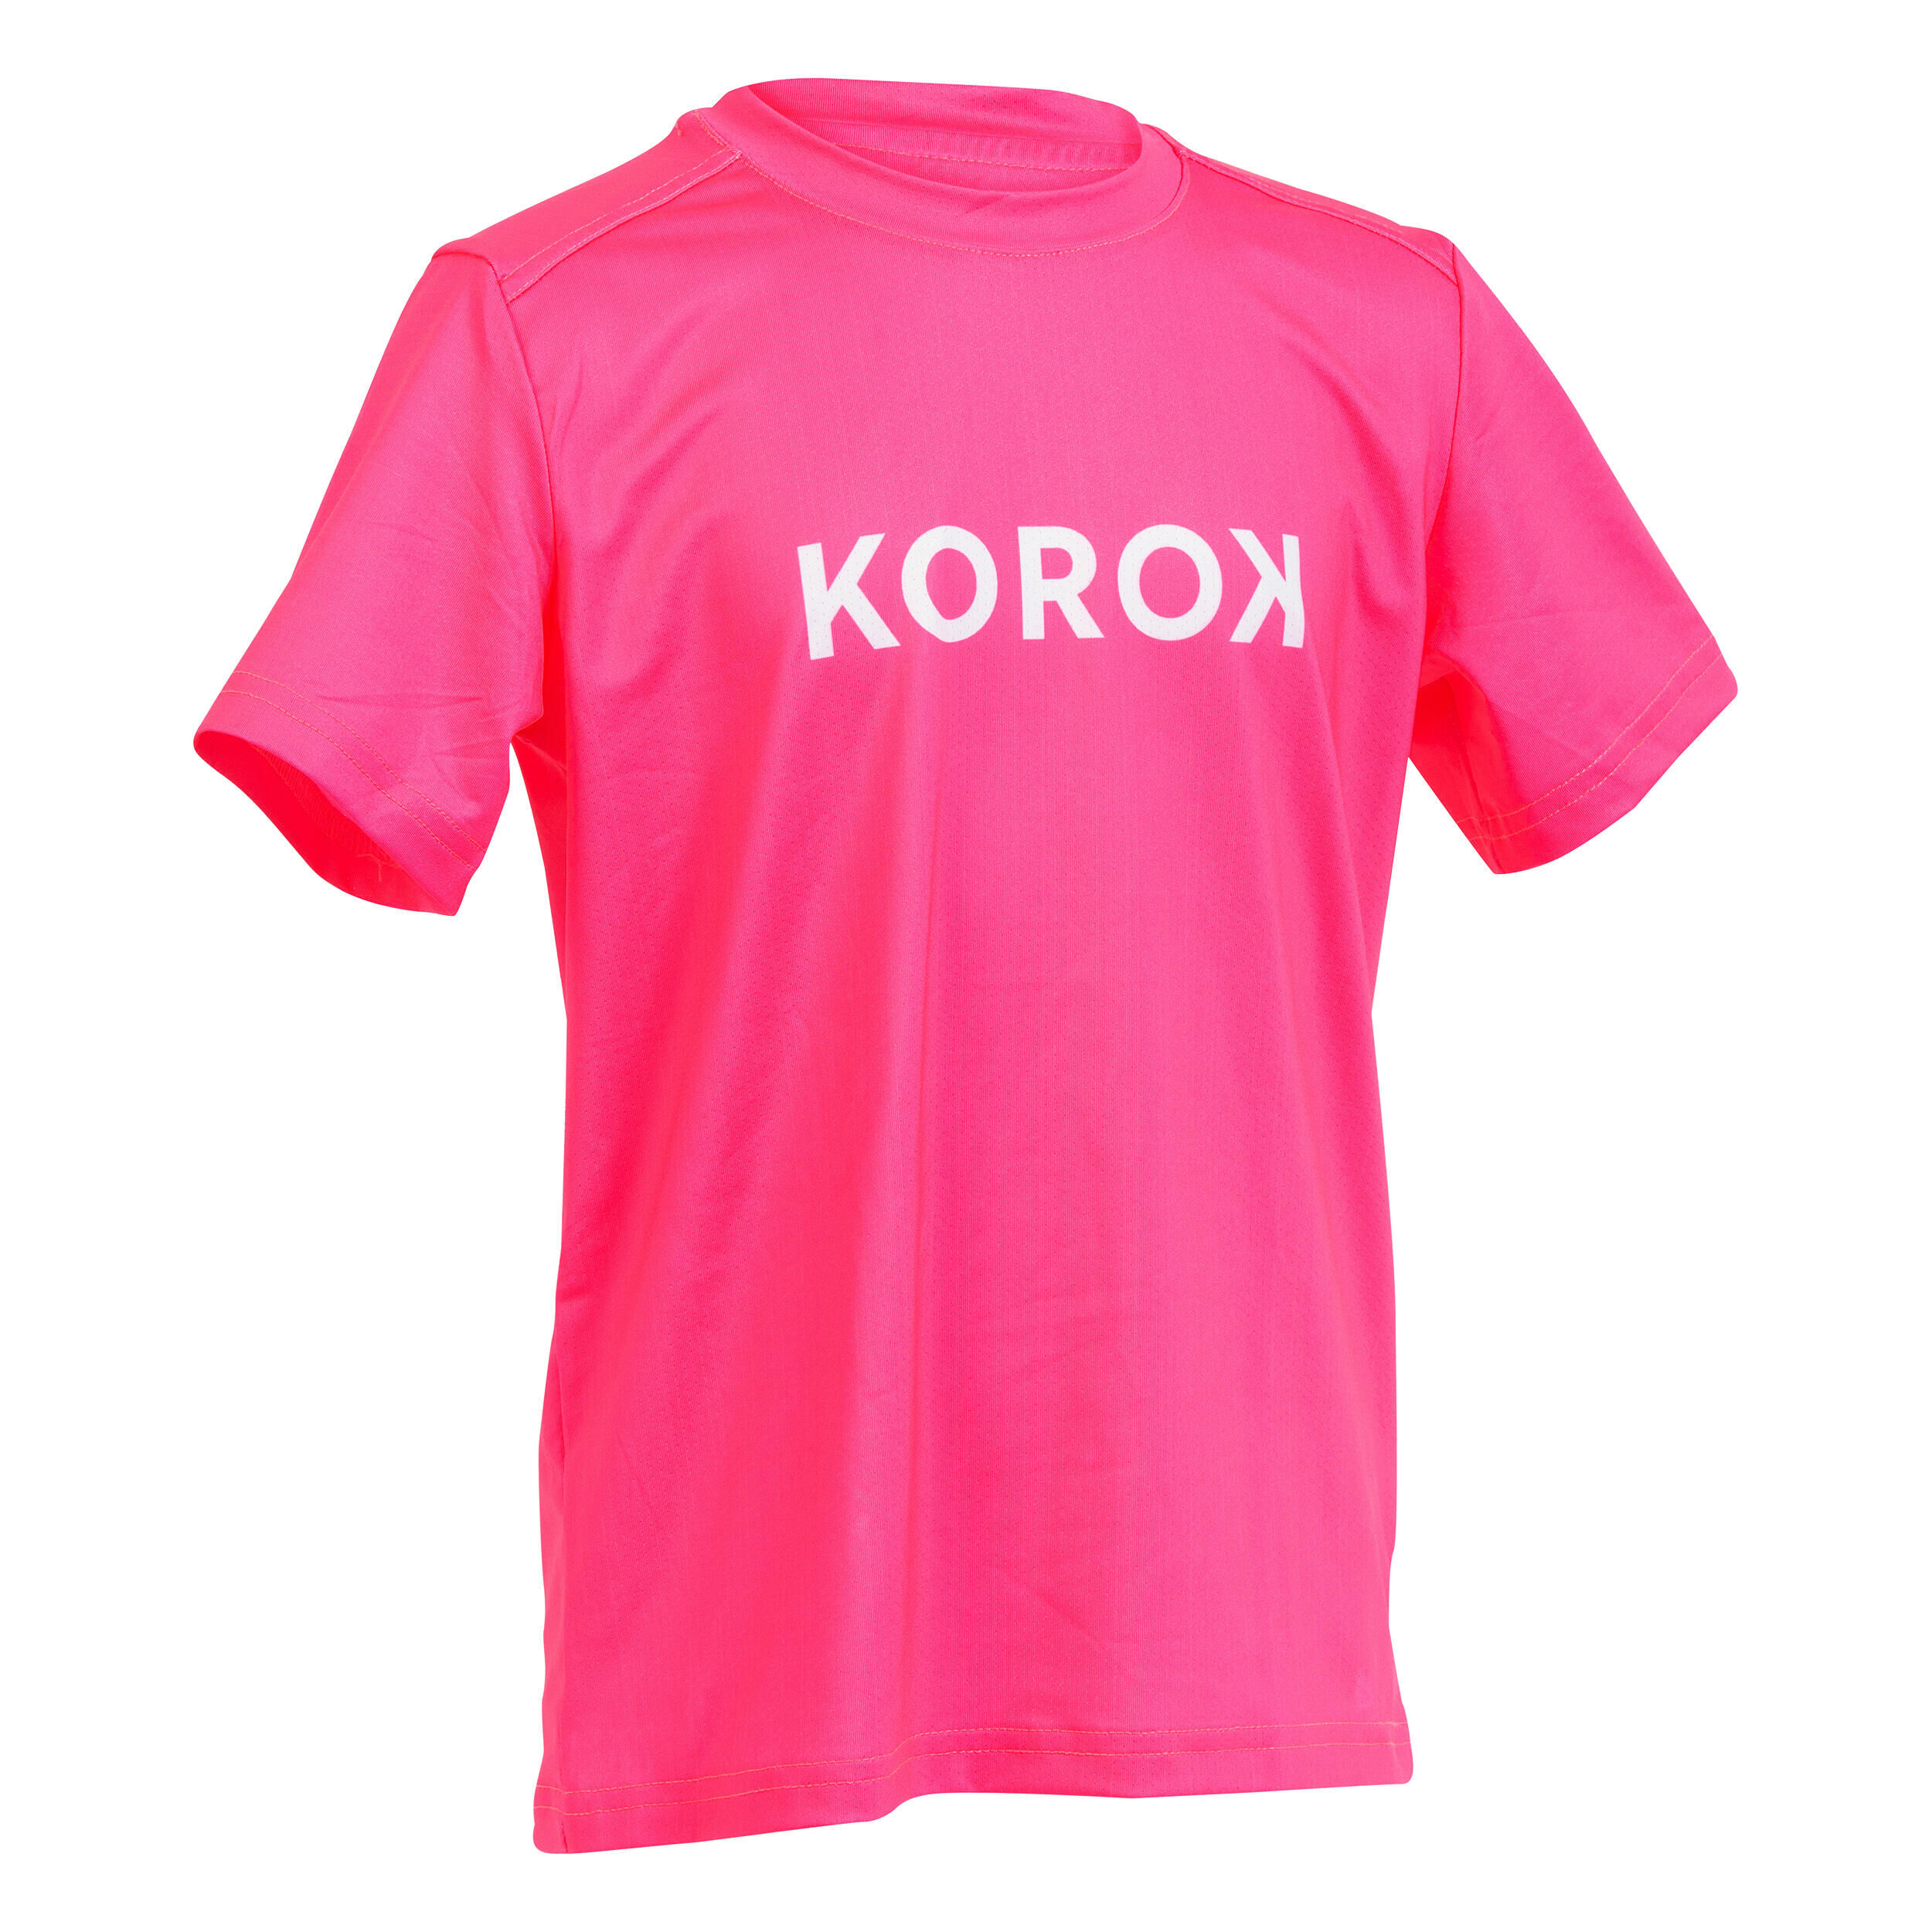 KOROK Kids' Warm-Up Field Hockey Jersey - Pink